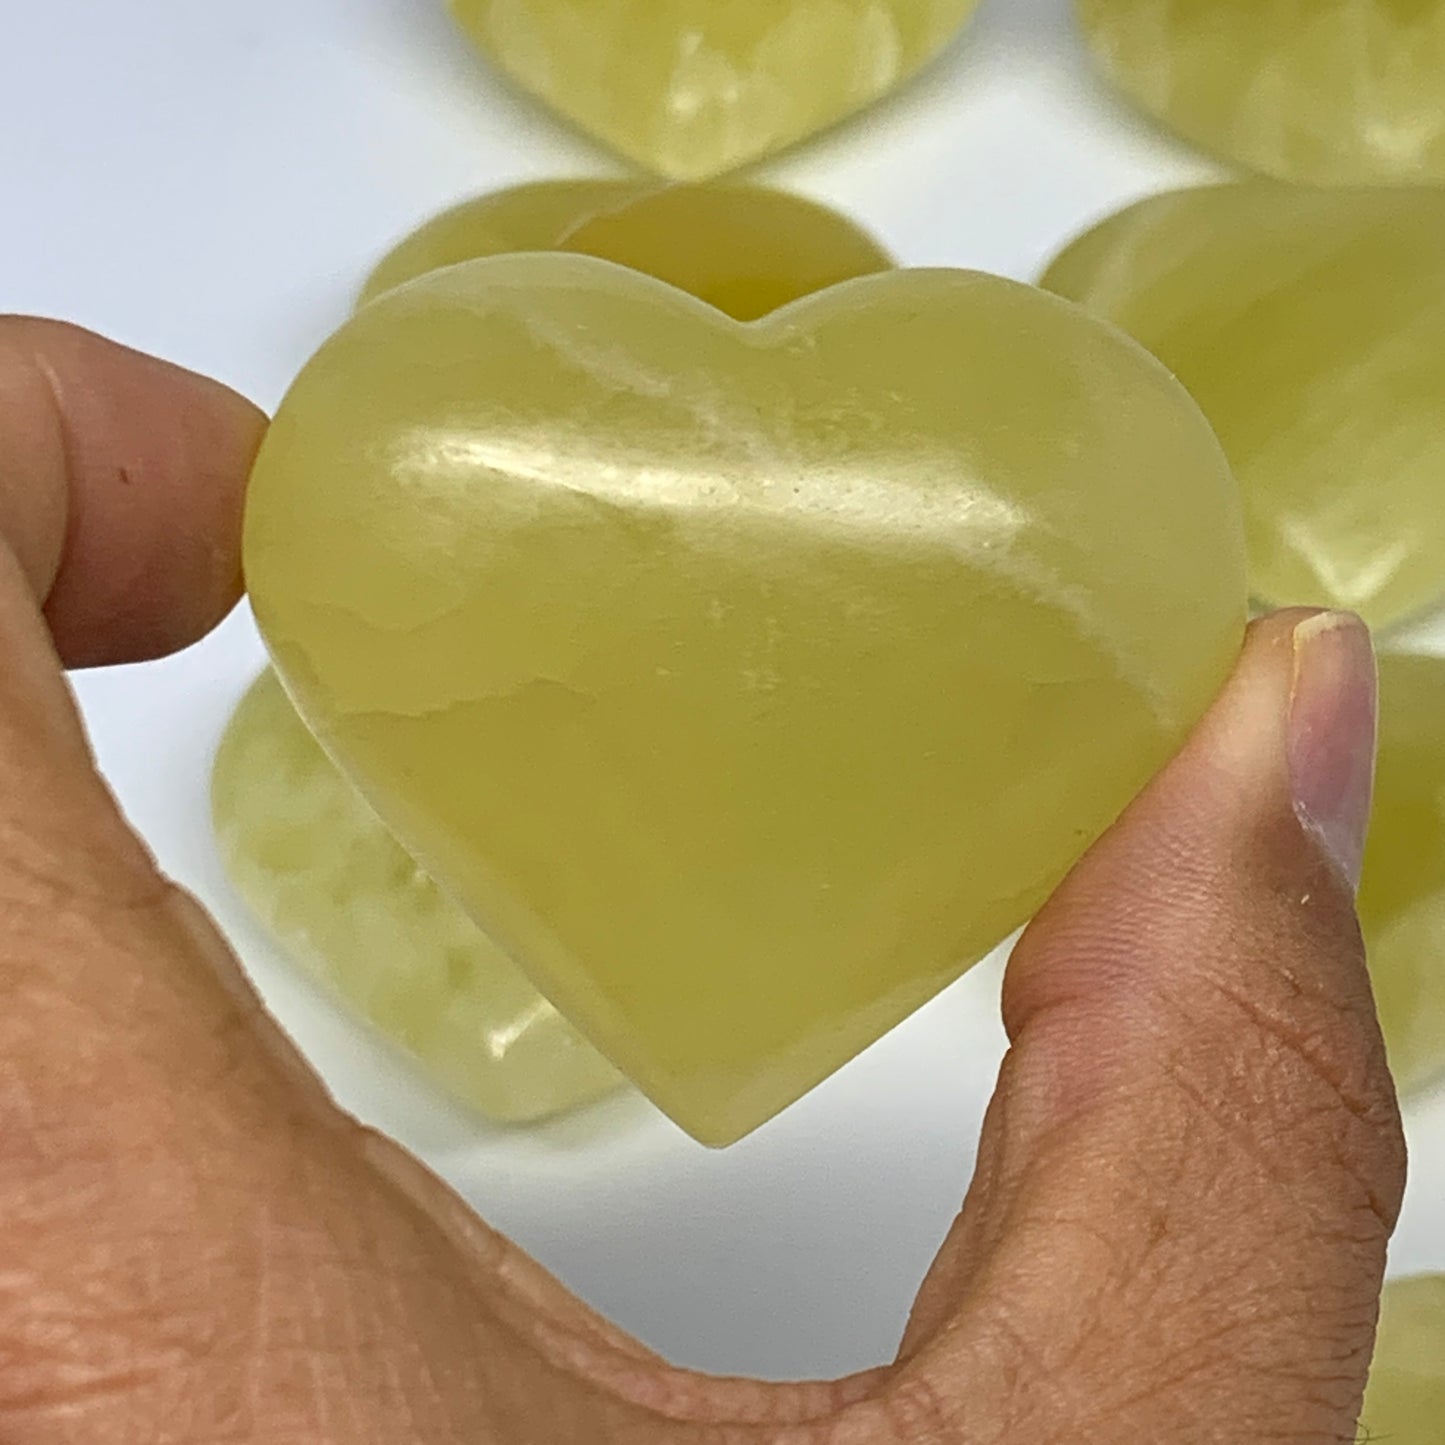 1015g (2.2 lbs) ,12 pcs, 1.7"- 2", Lemon Calcite Hearts @Afghanistan, B26837